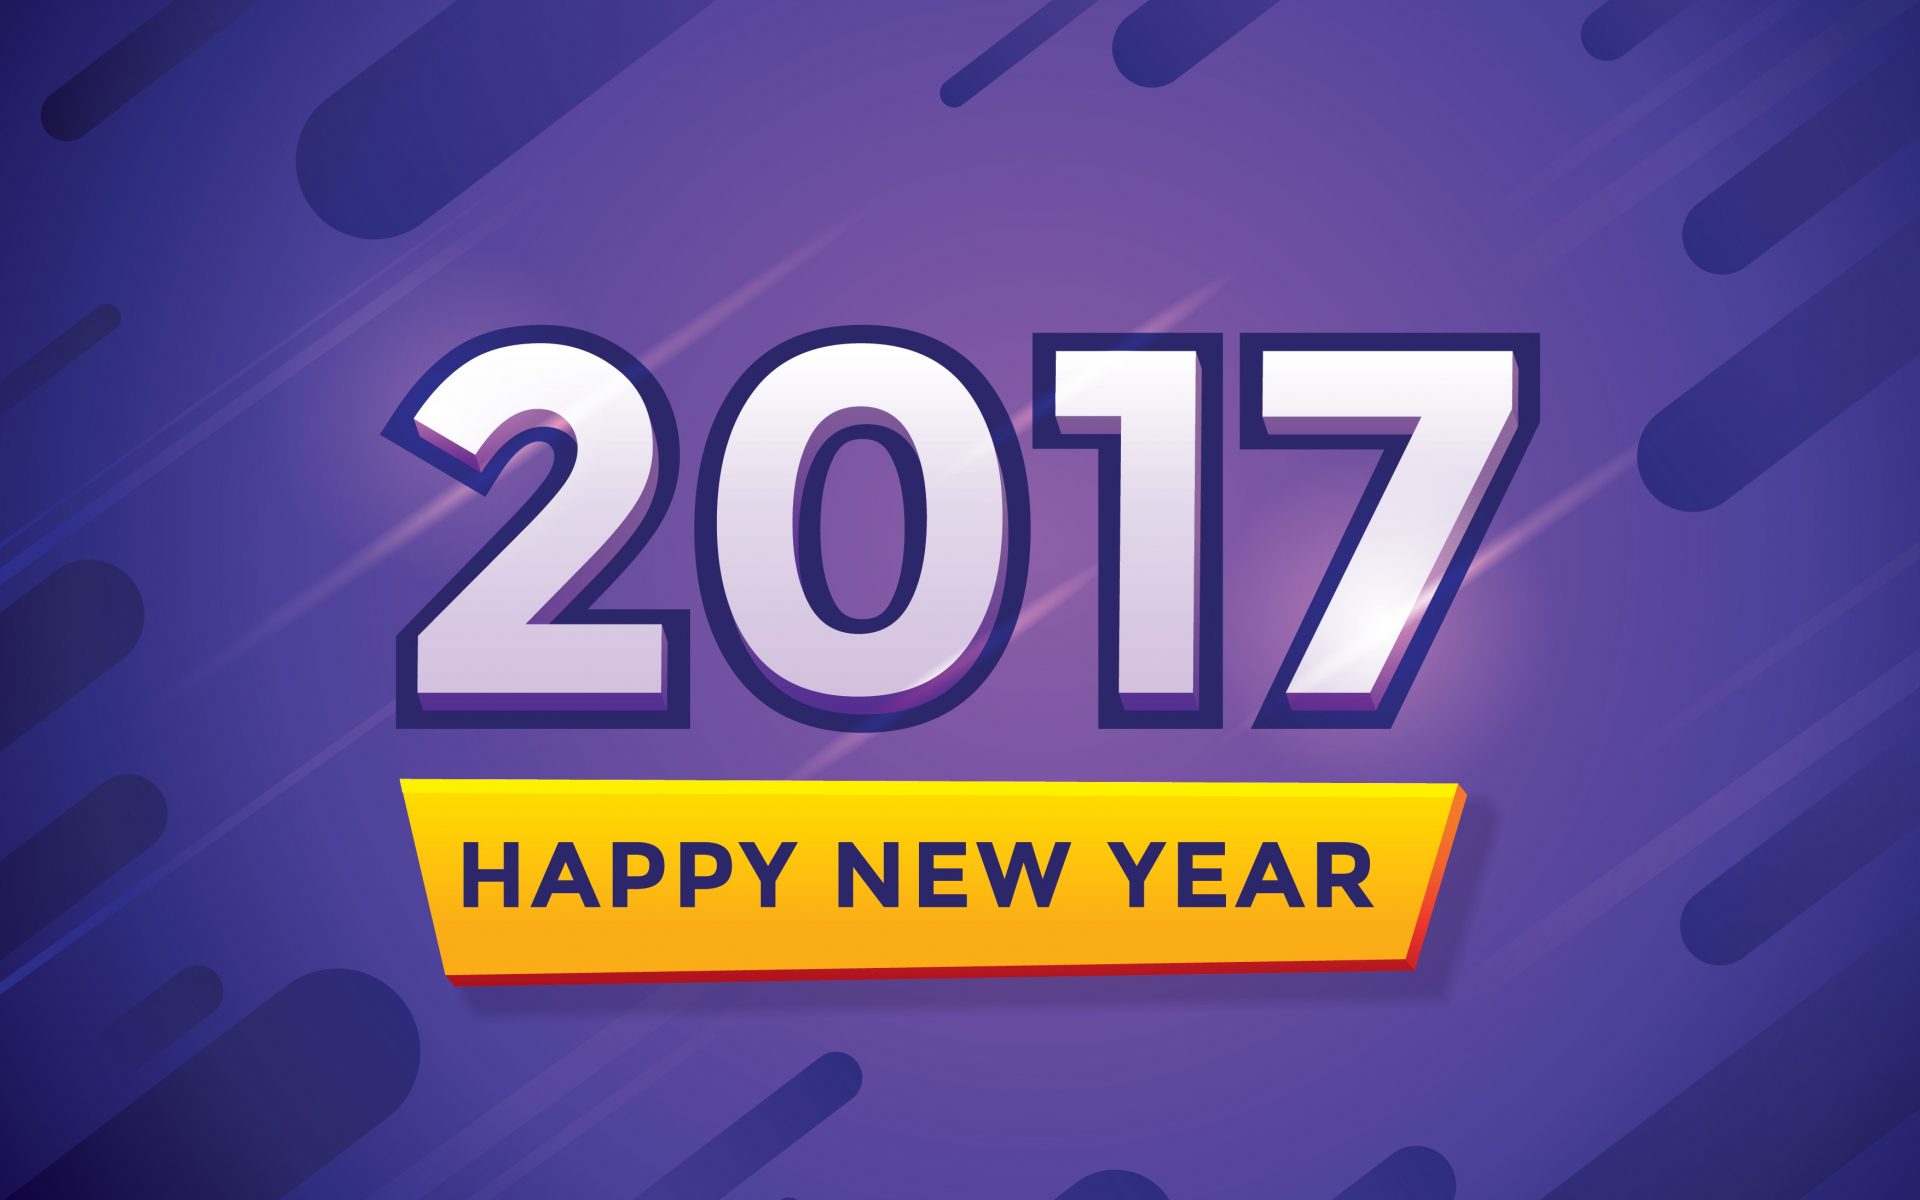 2017 Happy New Year Greetings